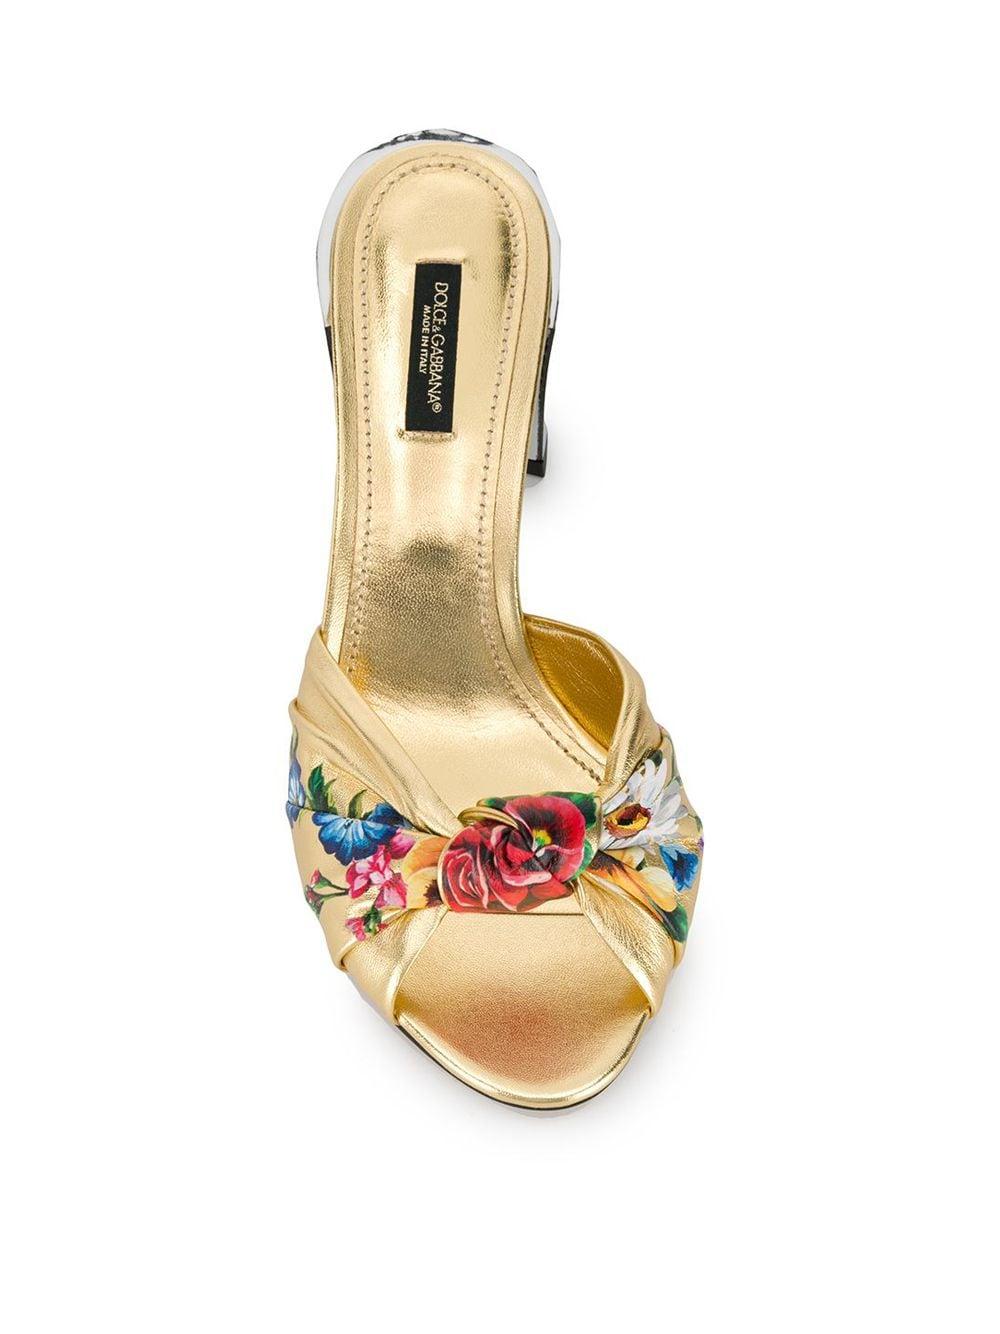 Dolce & Gabbana Floral Sandals in Metallic